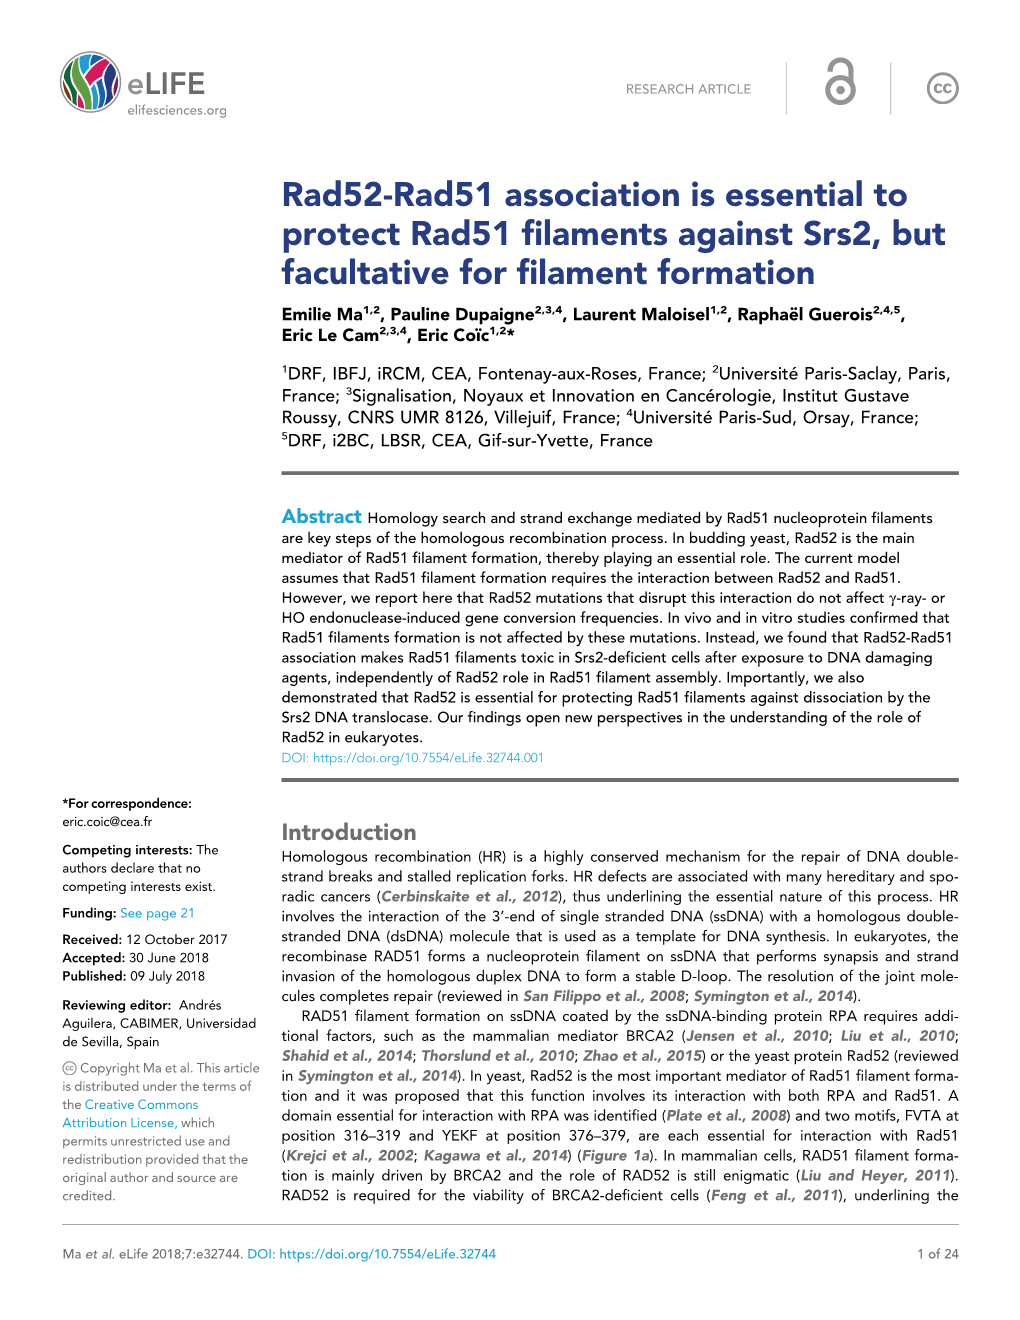 Rad52-Rad51 Association Is Essential to Protect Rad51 Filaments Against